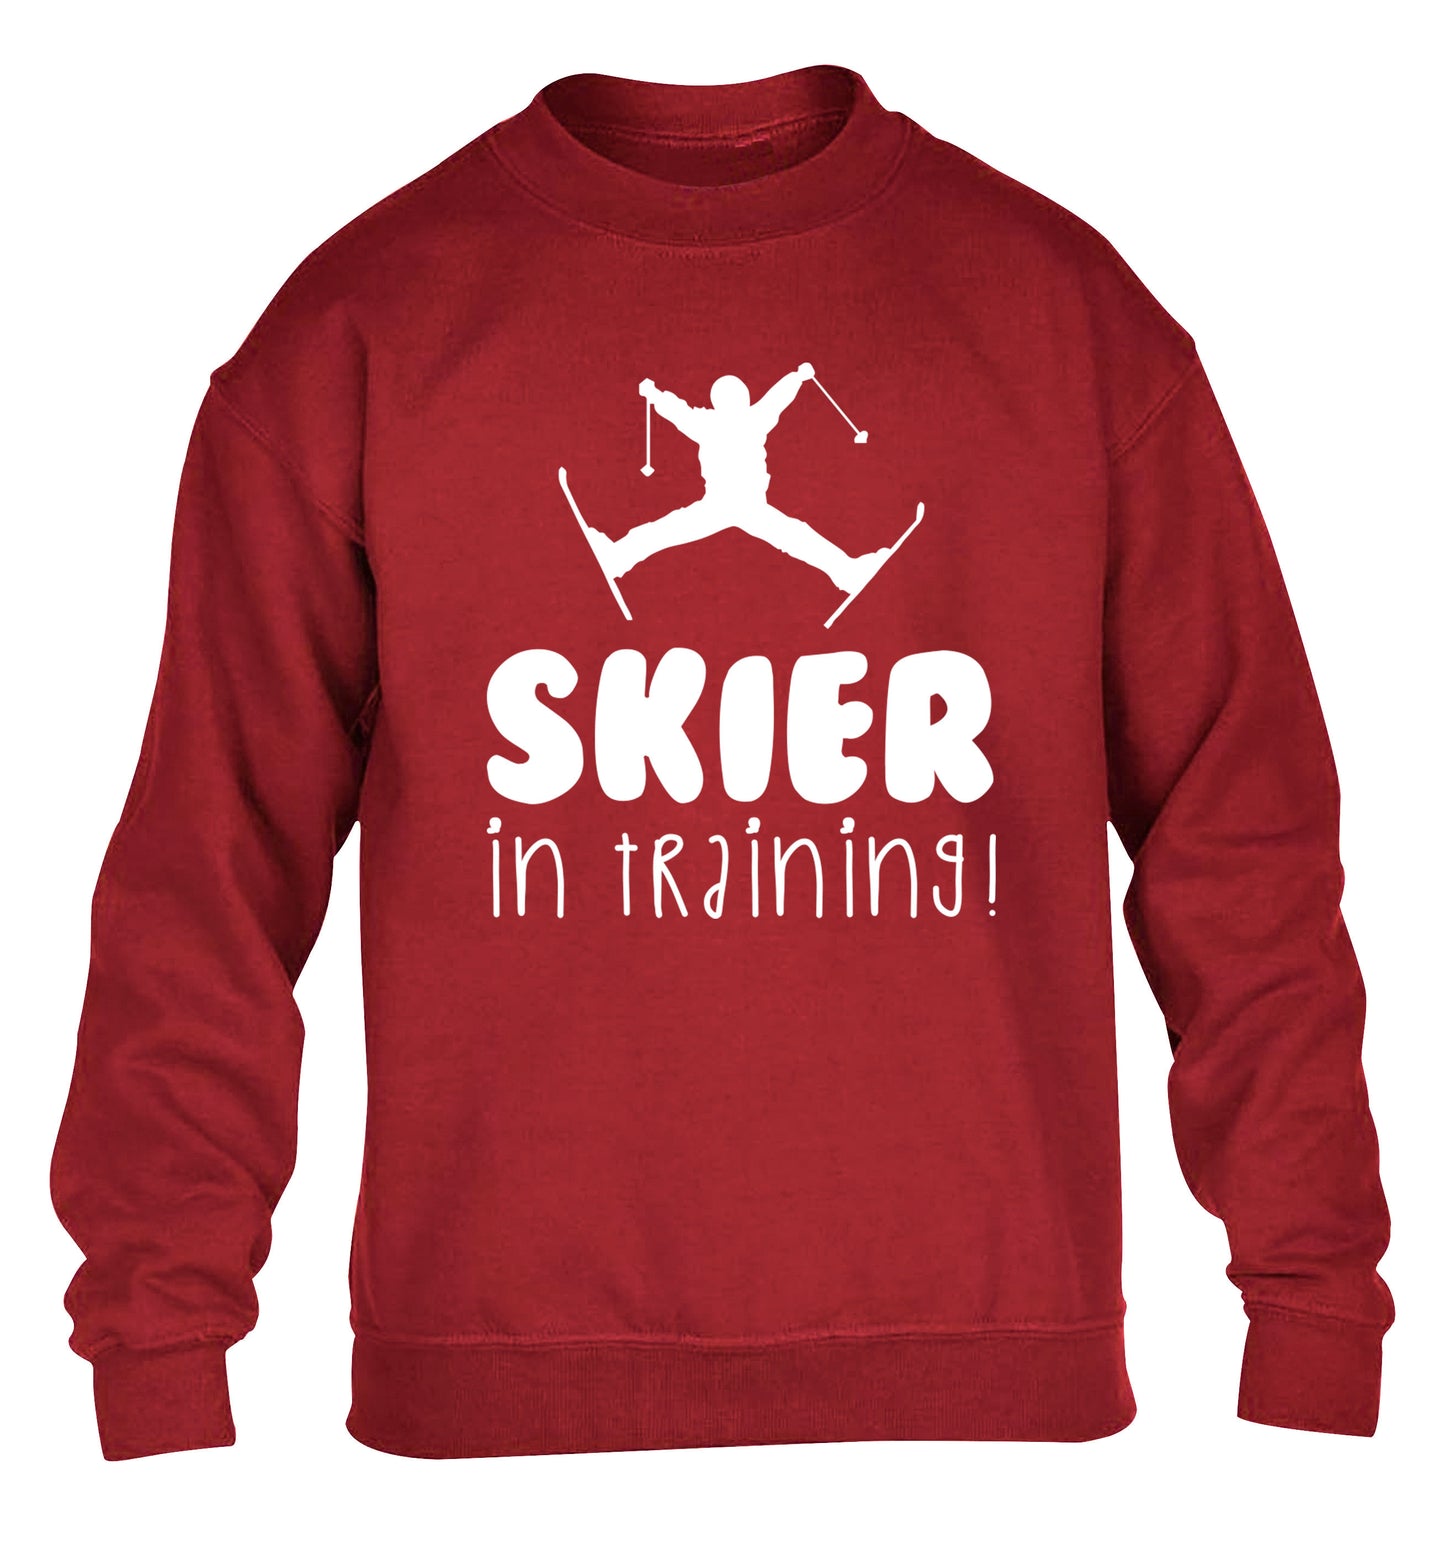 Skier in training children's grey sweater 12-14 Years